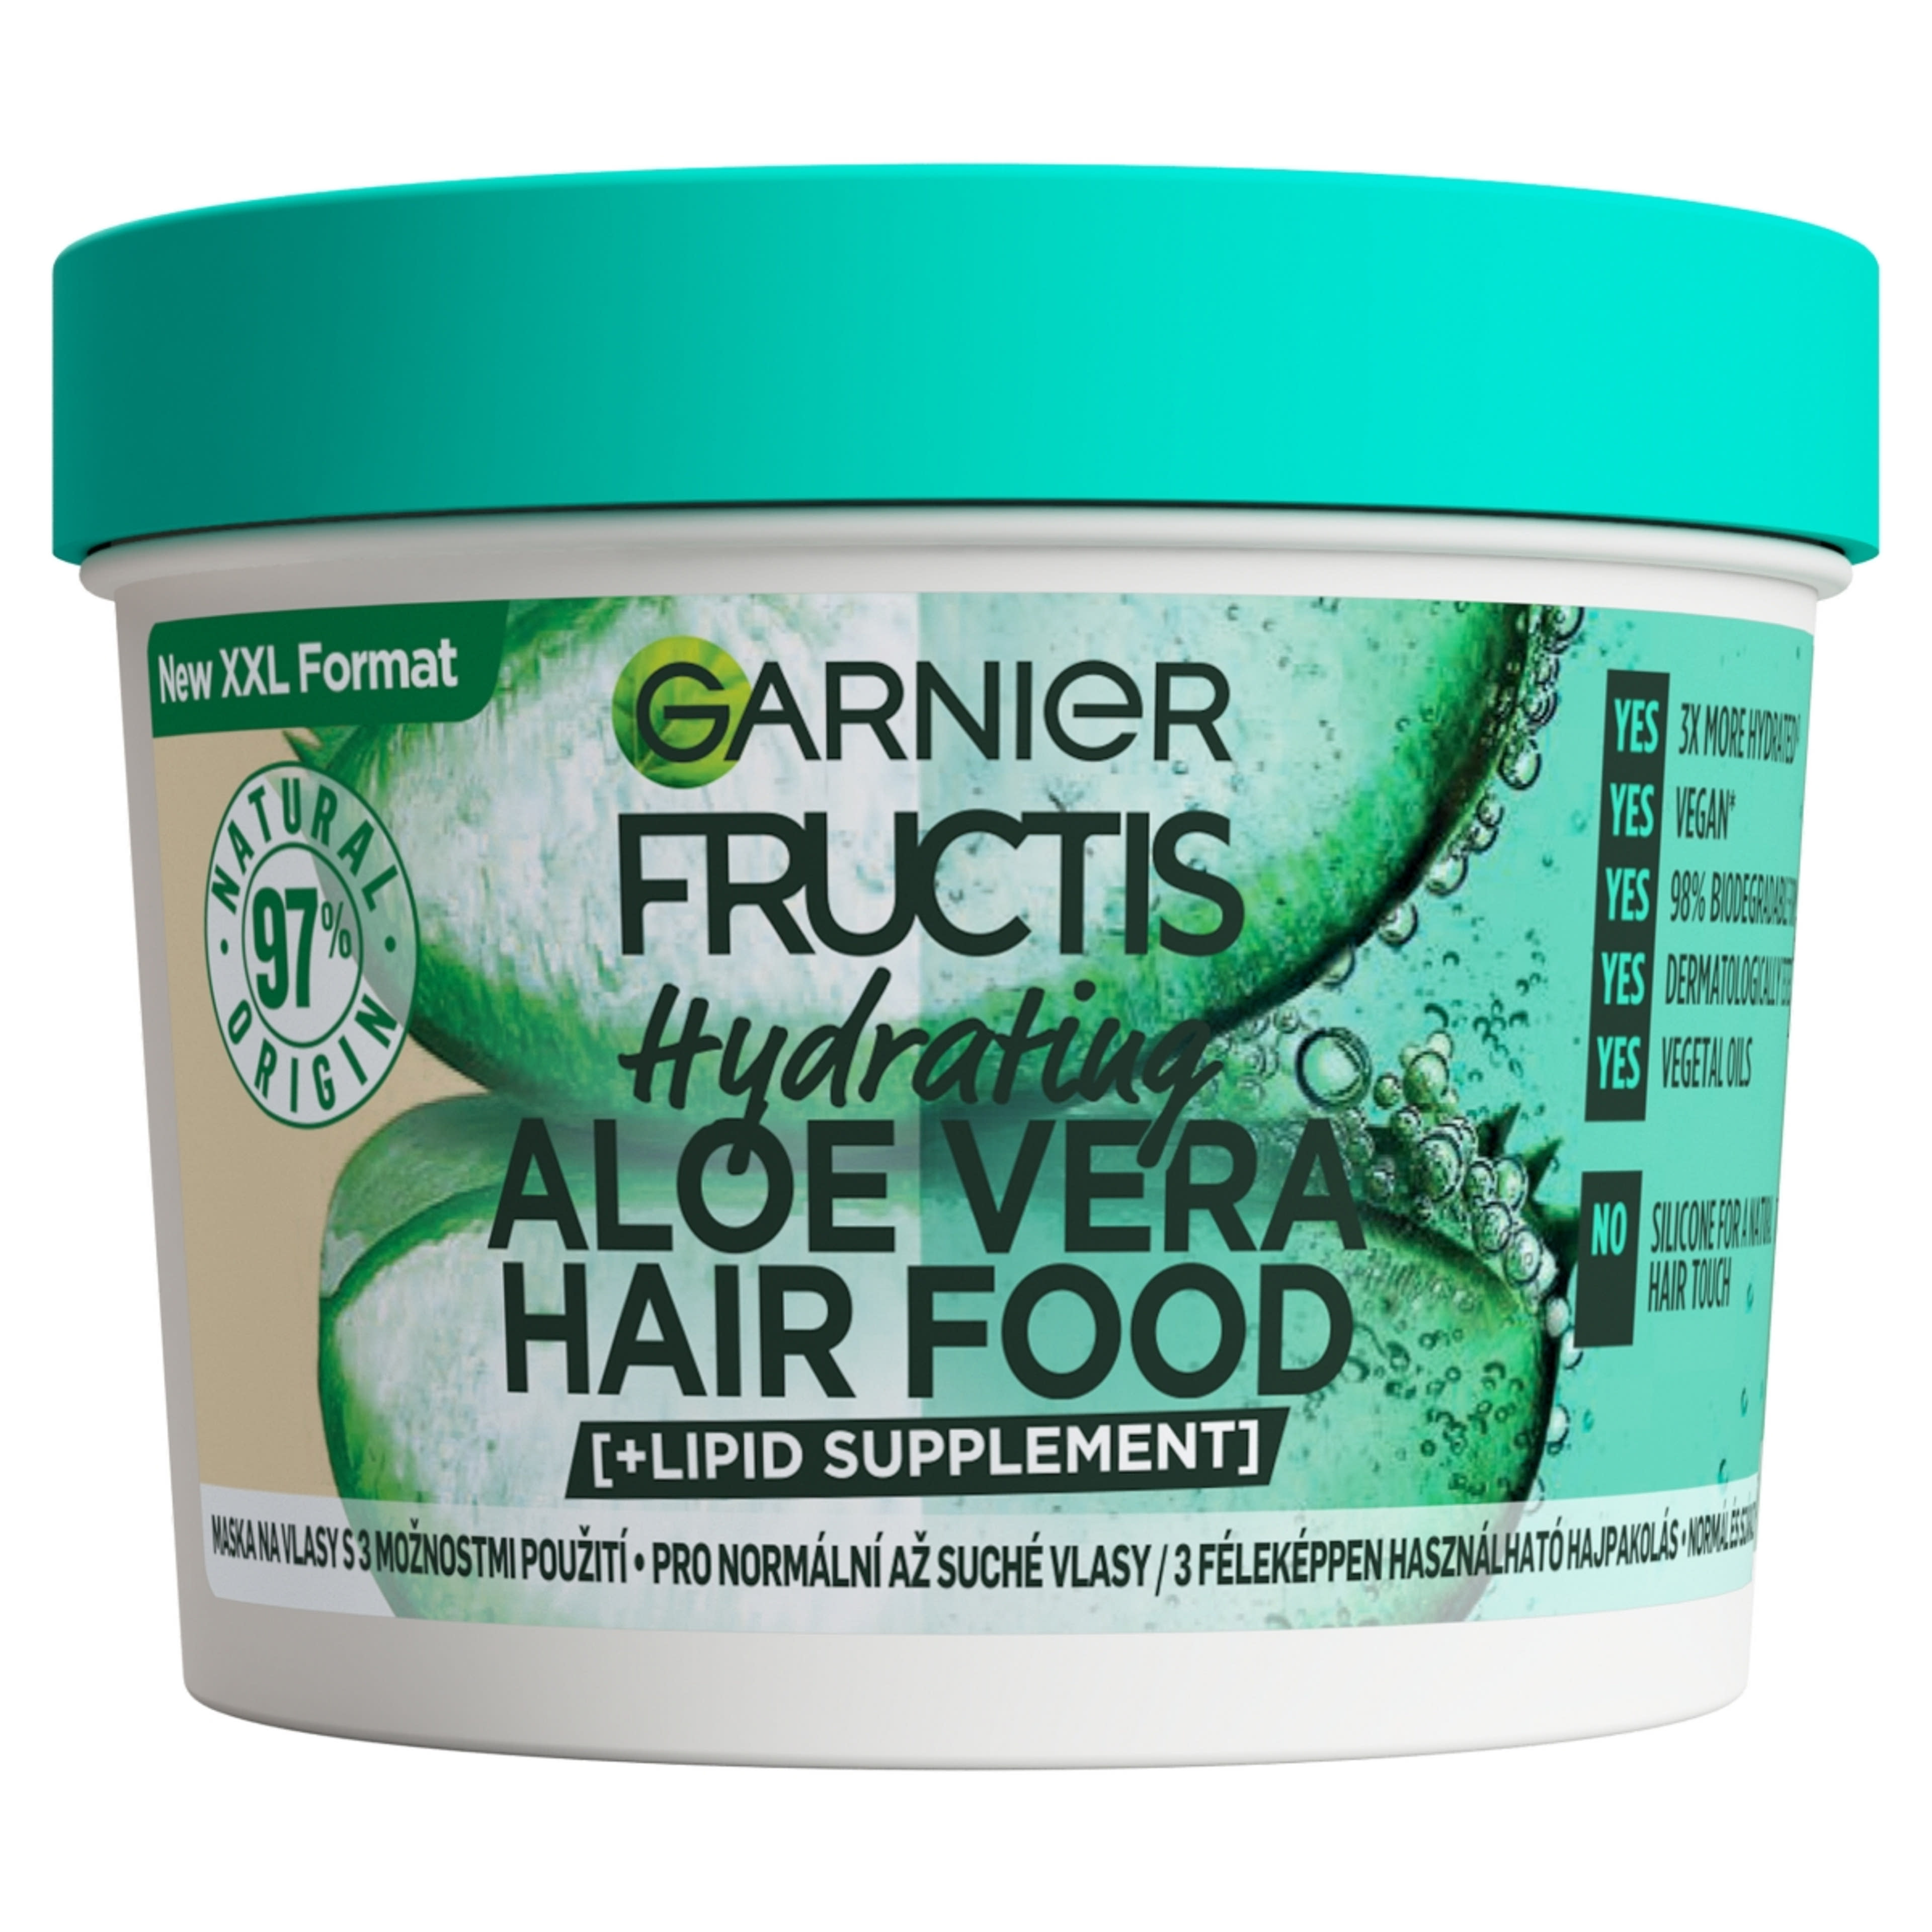 Garnier Fructis Hair Food Aloe Vera hajpakolás - 400 ml-1